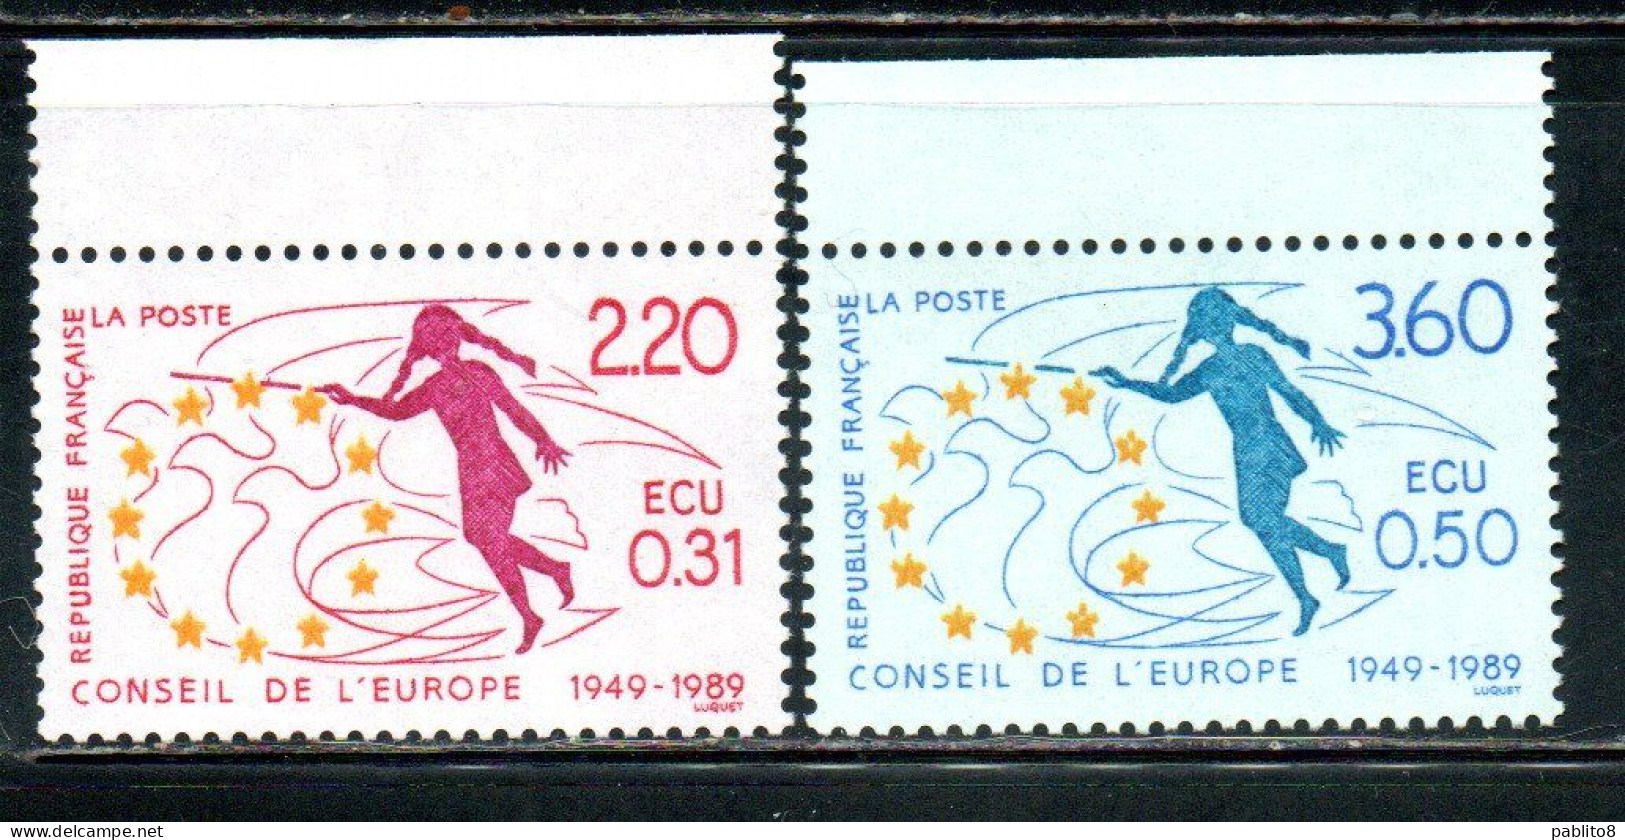 FRANCE FRANCIA 1989 CONSEIL DE L'EUROPE CONSIGLIO D'EUROPA EUROPEAN COUNCIL COMPLETE AET SERIE COMPLETA MNH - Neufs